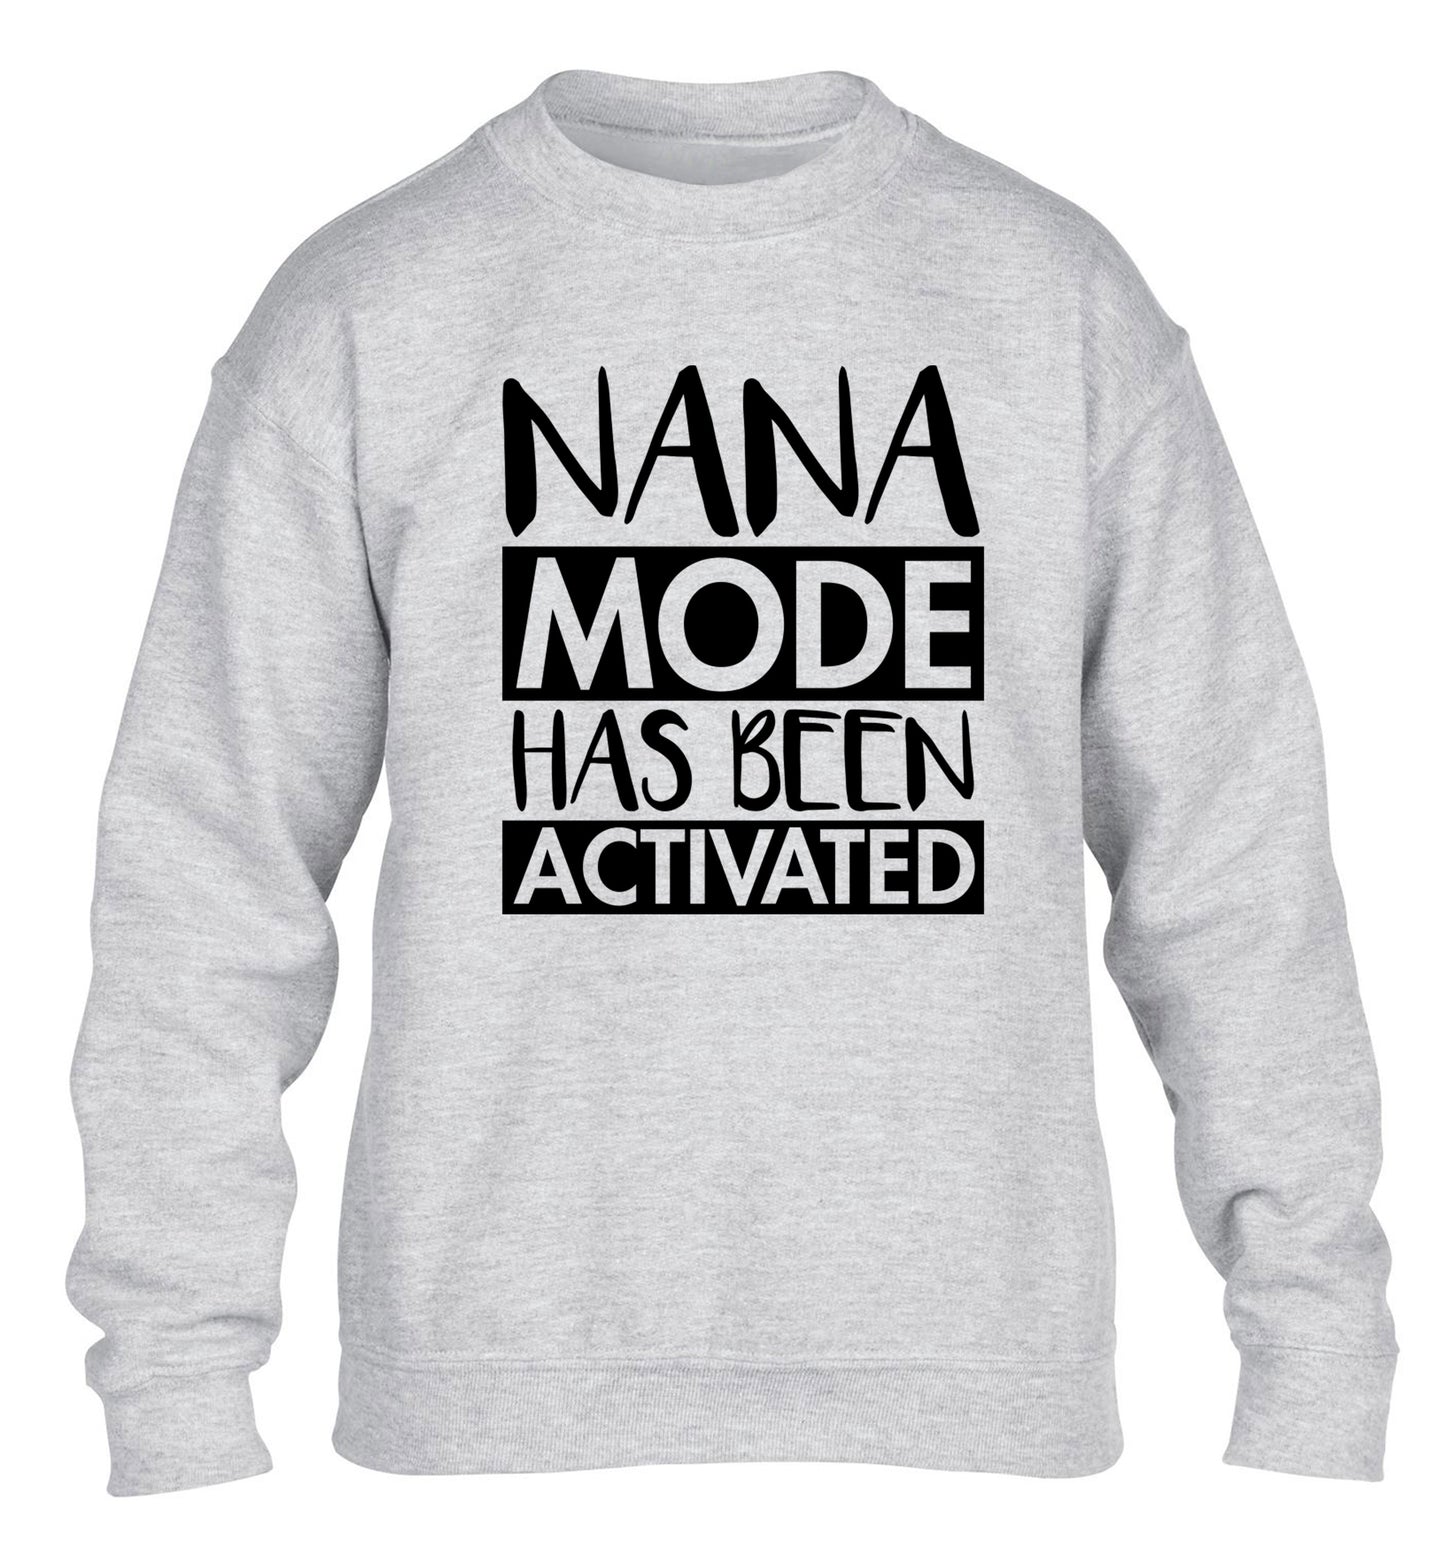 Nana mode activated children's grey sweater 12-14 Years